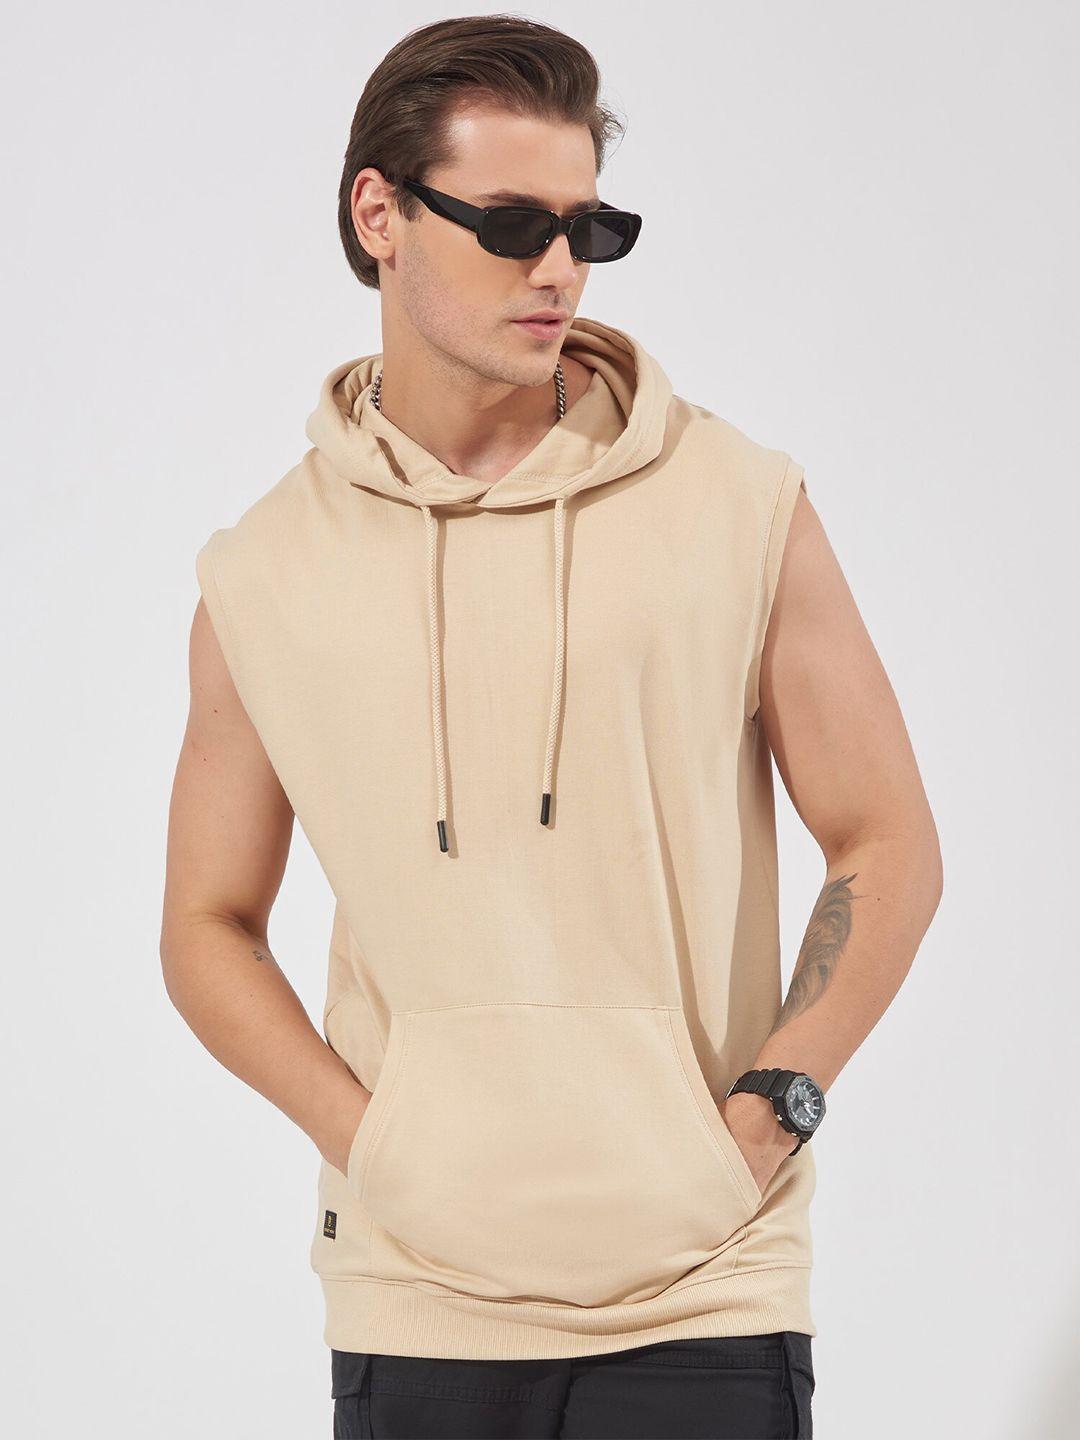 maniac sleeveless hooded pure cotton slim fit t-shirt